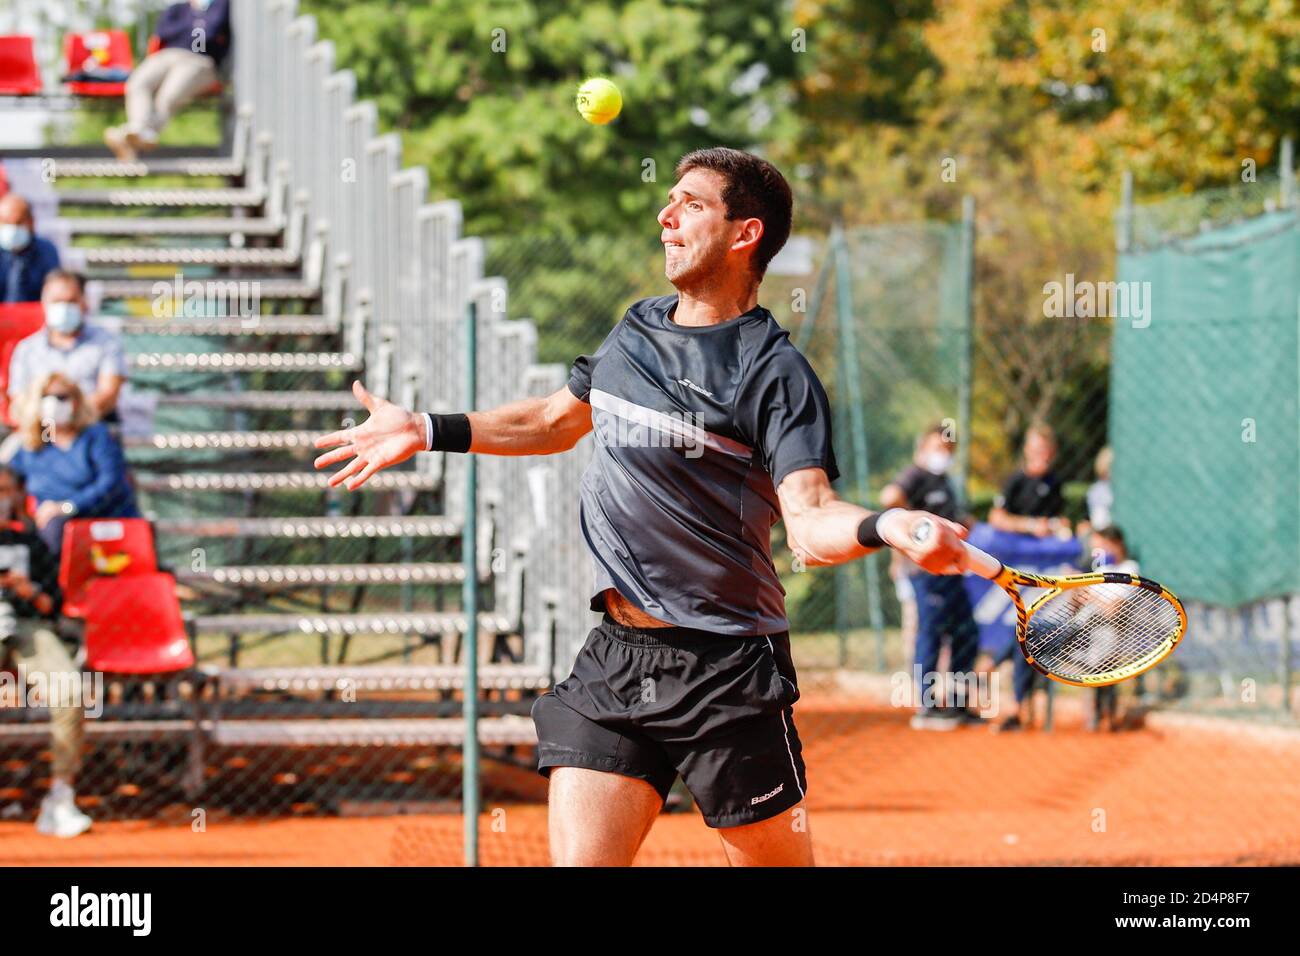 Ederico Delbonis durante l'ATP Challenger 125 - internazionali Emilia Romagna, Tennis Internationals, parma, Italy, 09 Oct 2020 Credit: LM/Roberta Corrad Foto Stock